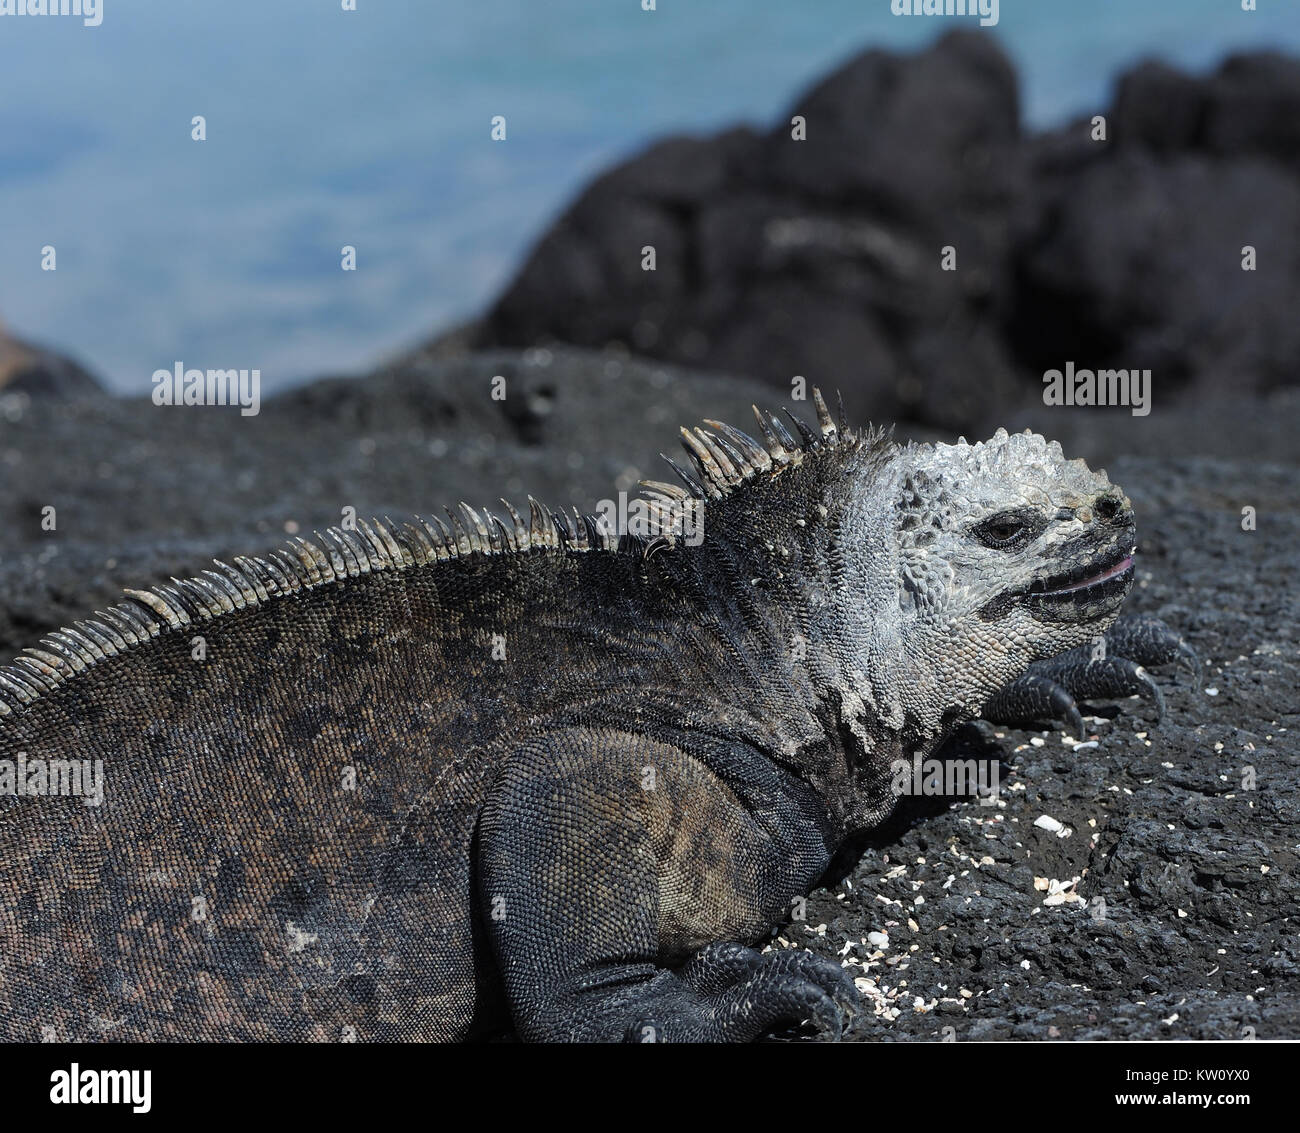 A marine iguana or Galápagos marine iguana (Amblyrhynchus cristatus cristatus) suns itself on black lava rocks. This subspecies is endemic to Isabela Stock Photo